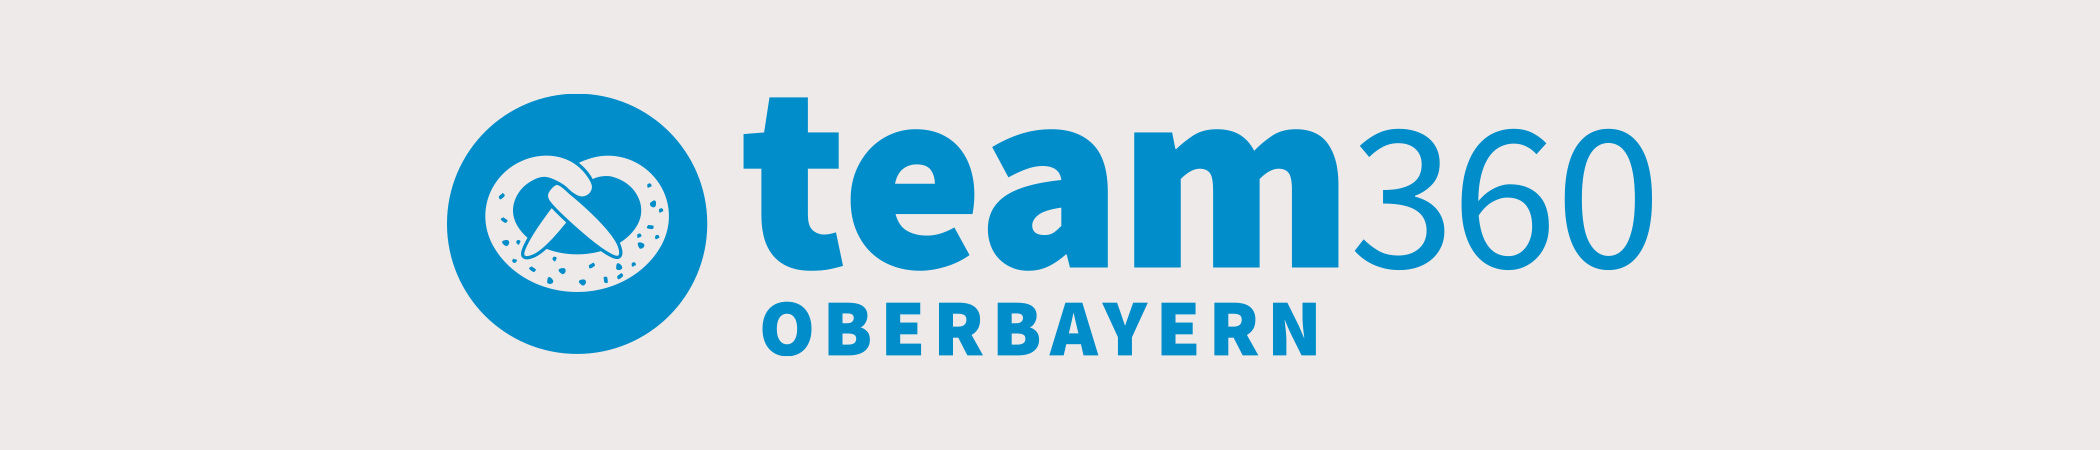 Team Oberbayern | 360 Grad Rundgänge rund um Oberbayern